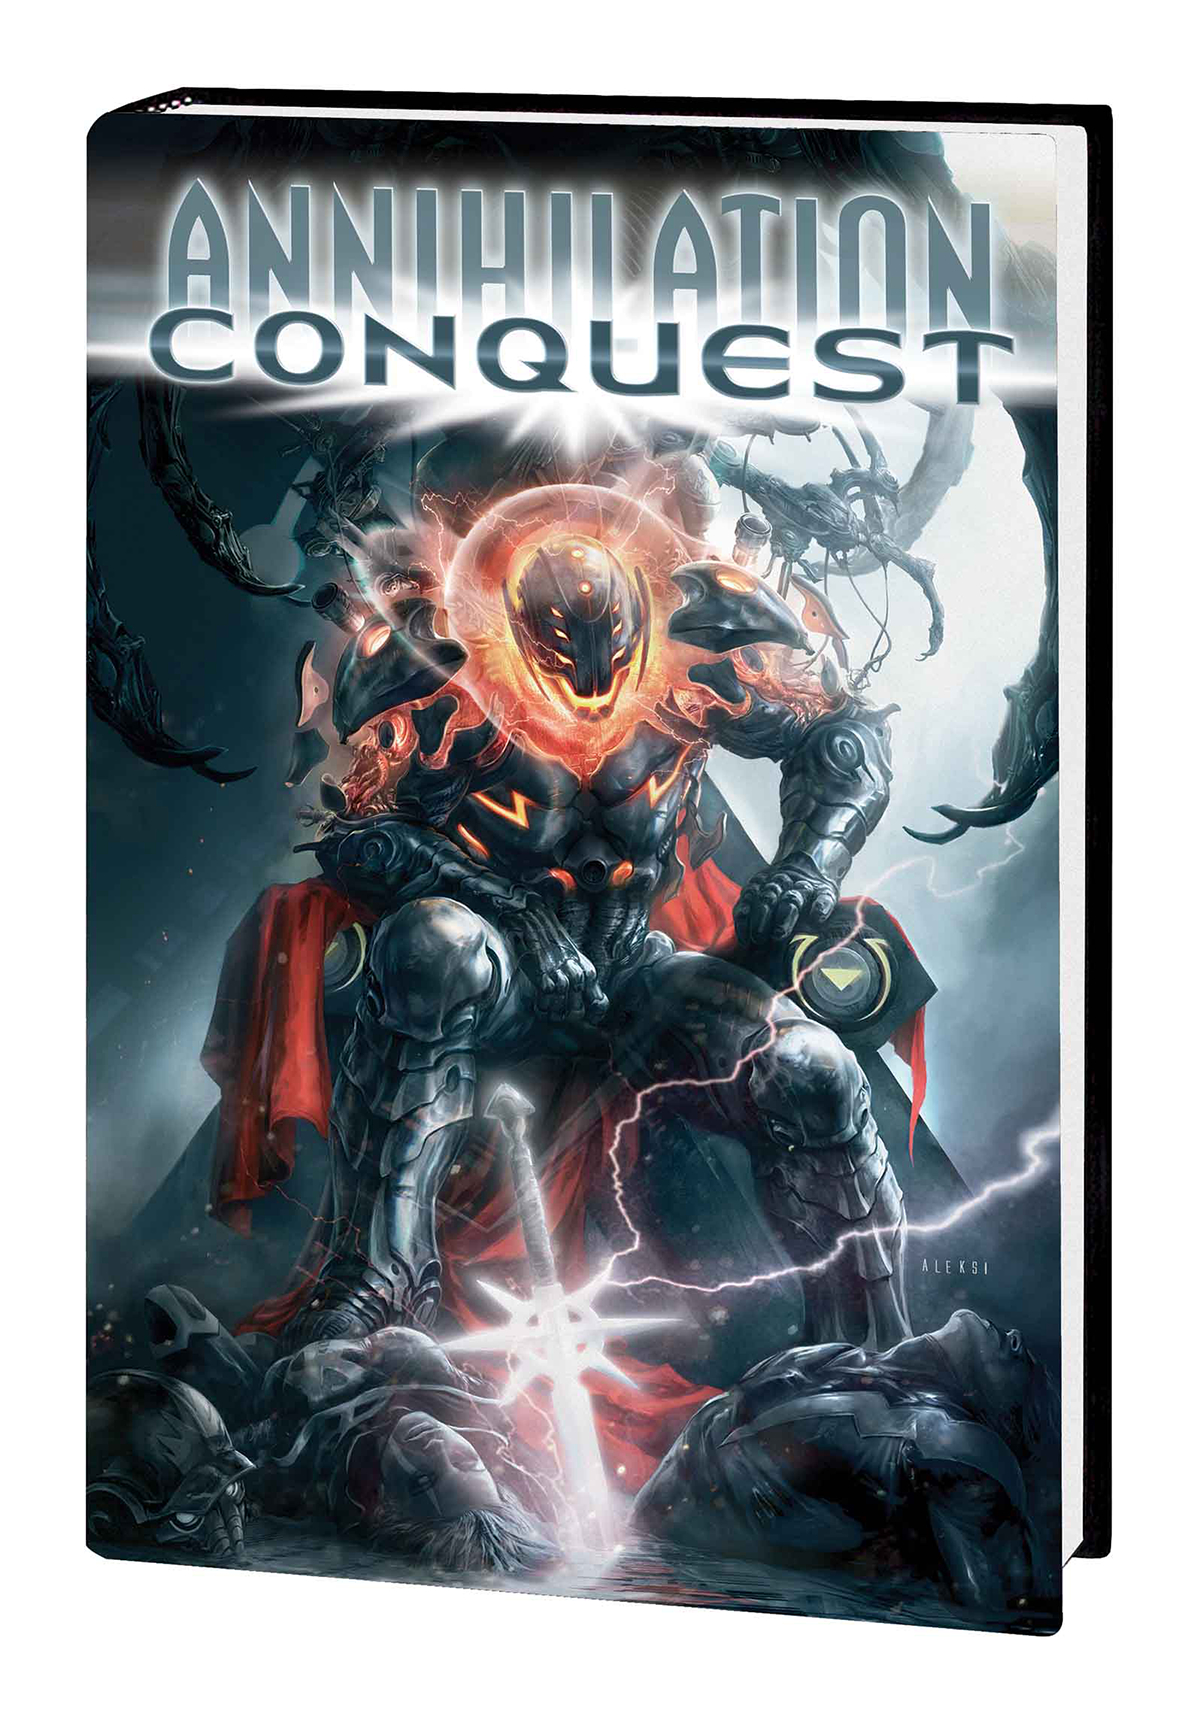 Annihilation: Conquest HD wallpapers, Desktop wallpaper - most viewed